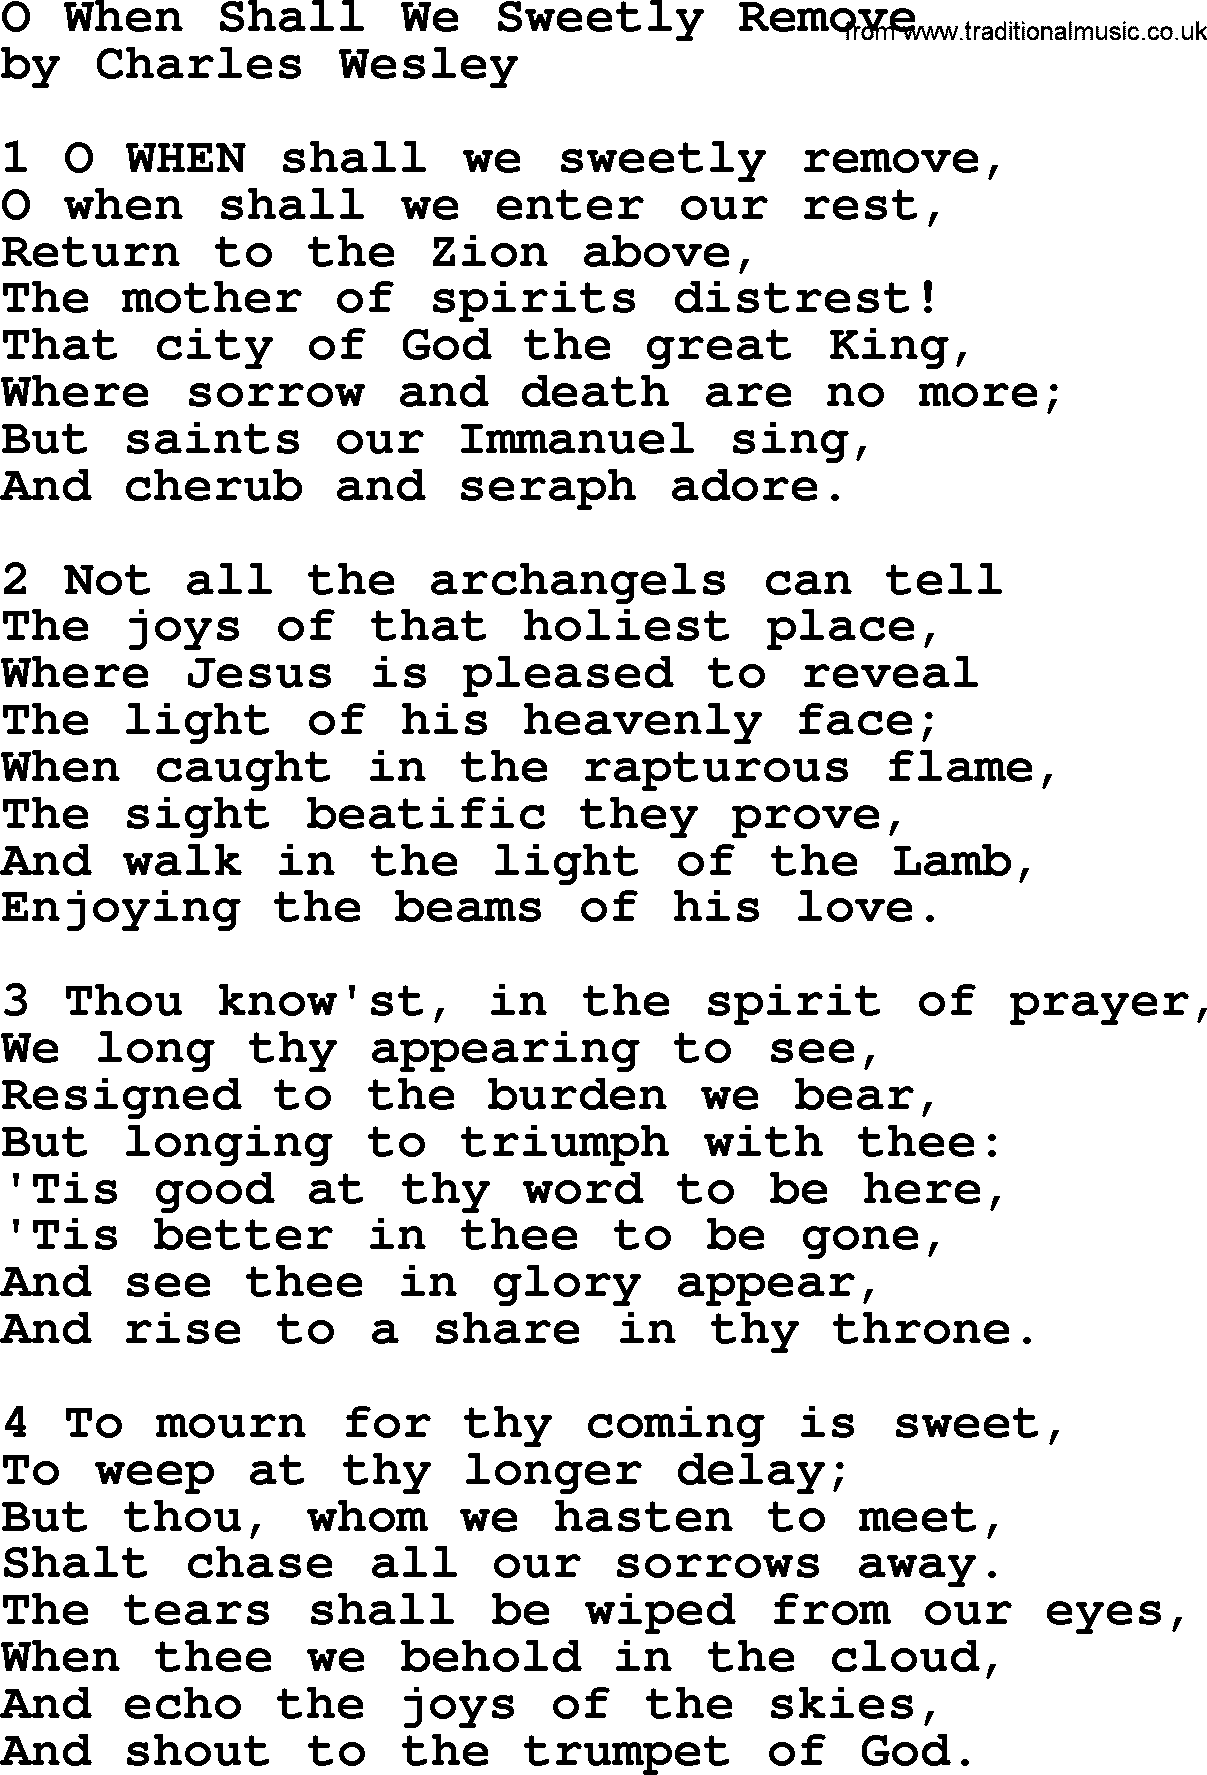 Charles Wesley hymn: O When Shall We Sweetly Remove, lyrics